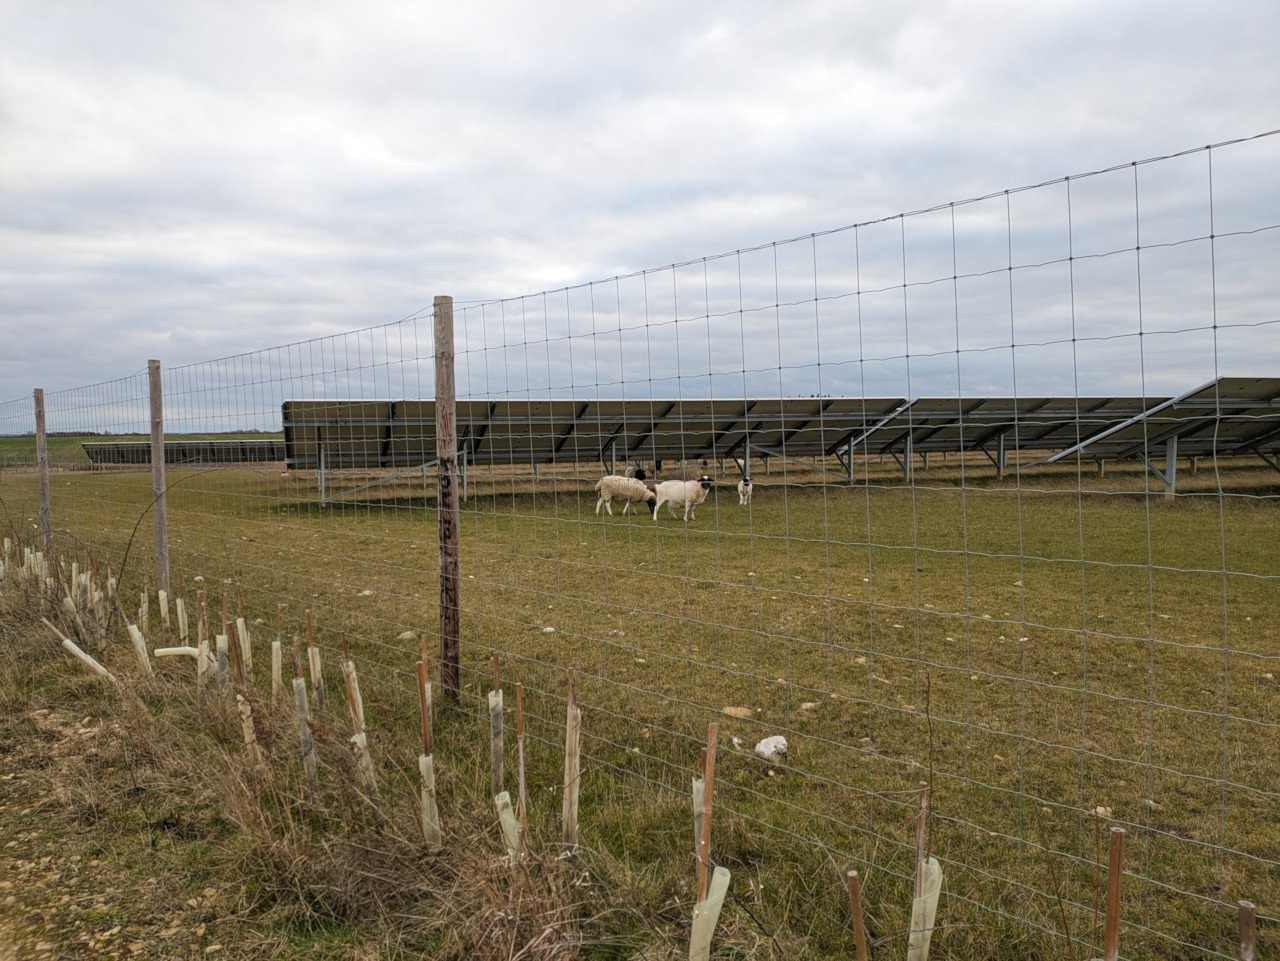 Sheep next to soloar farm.